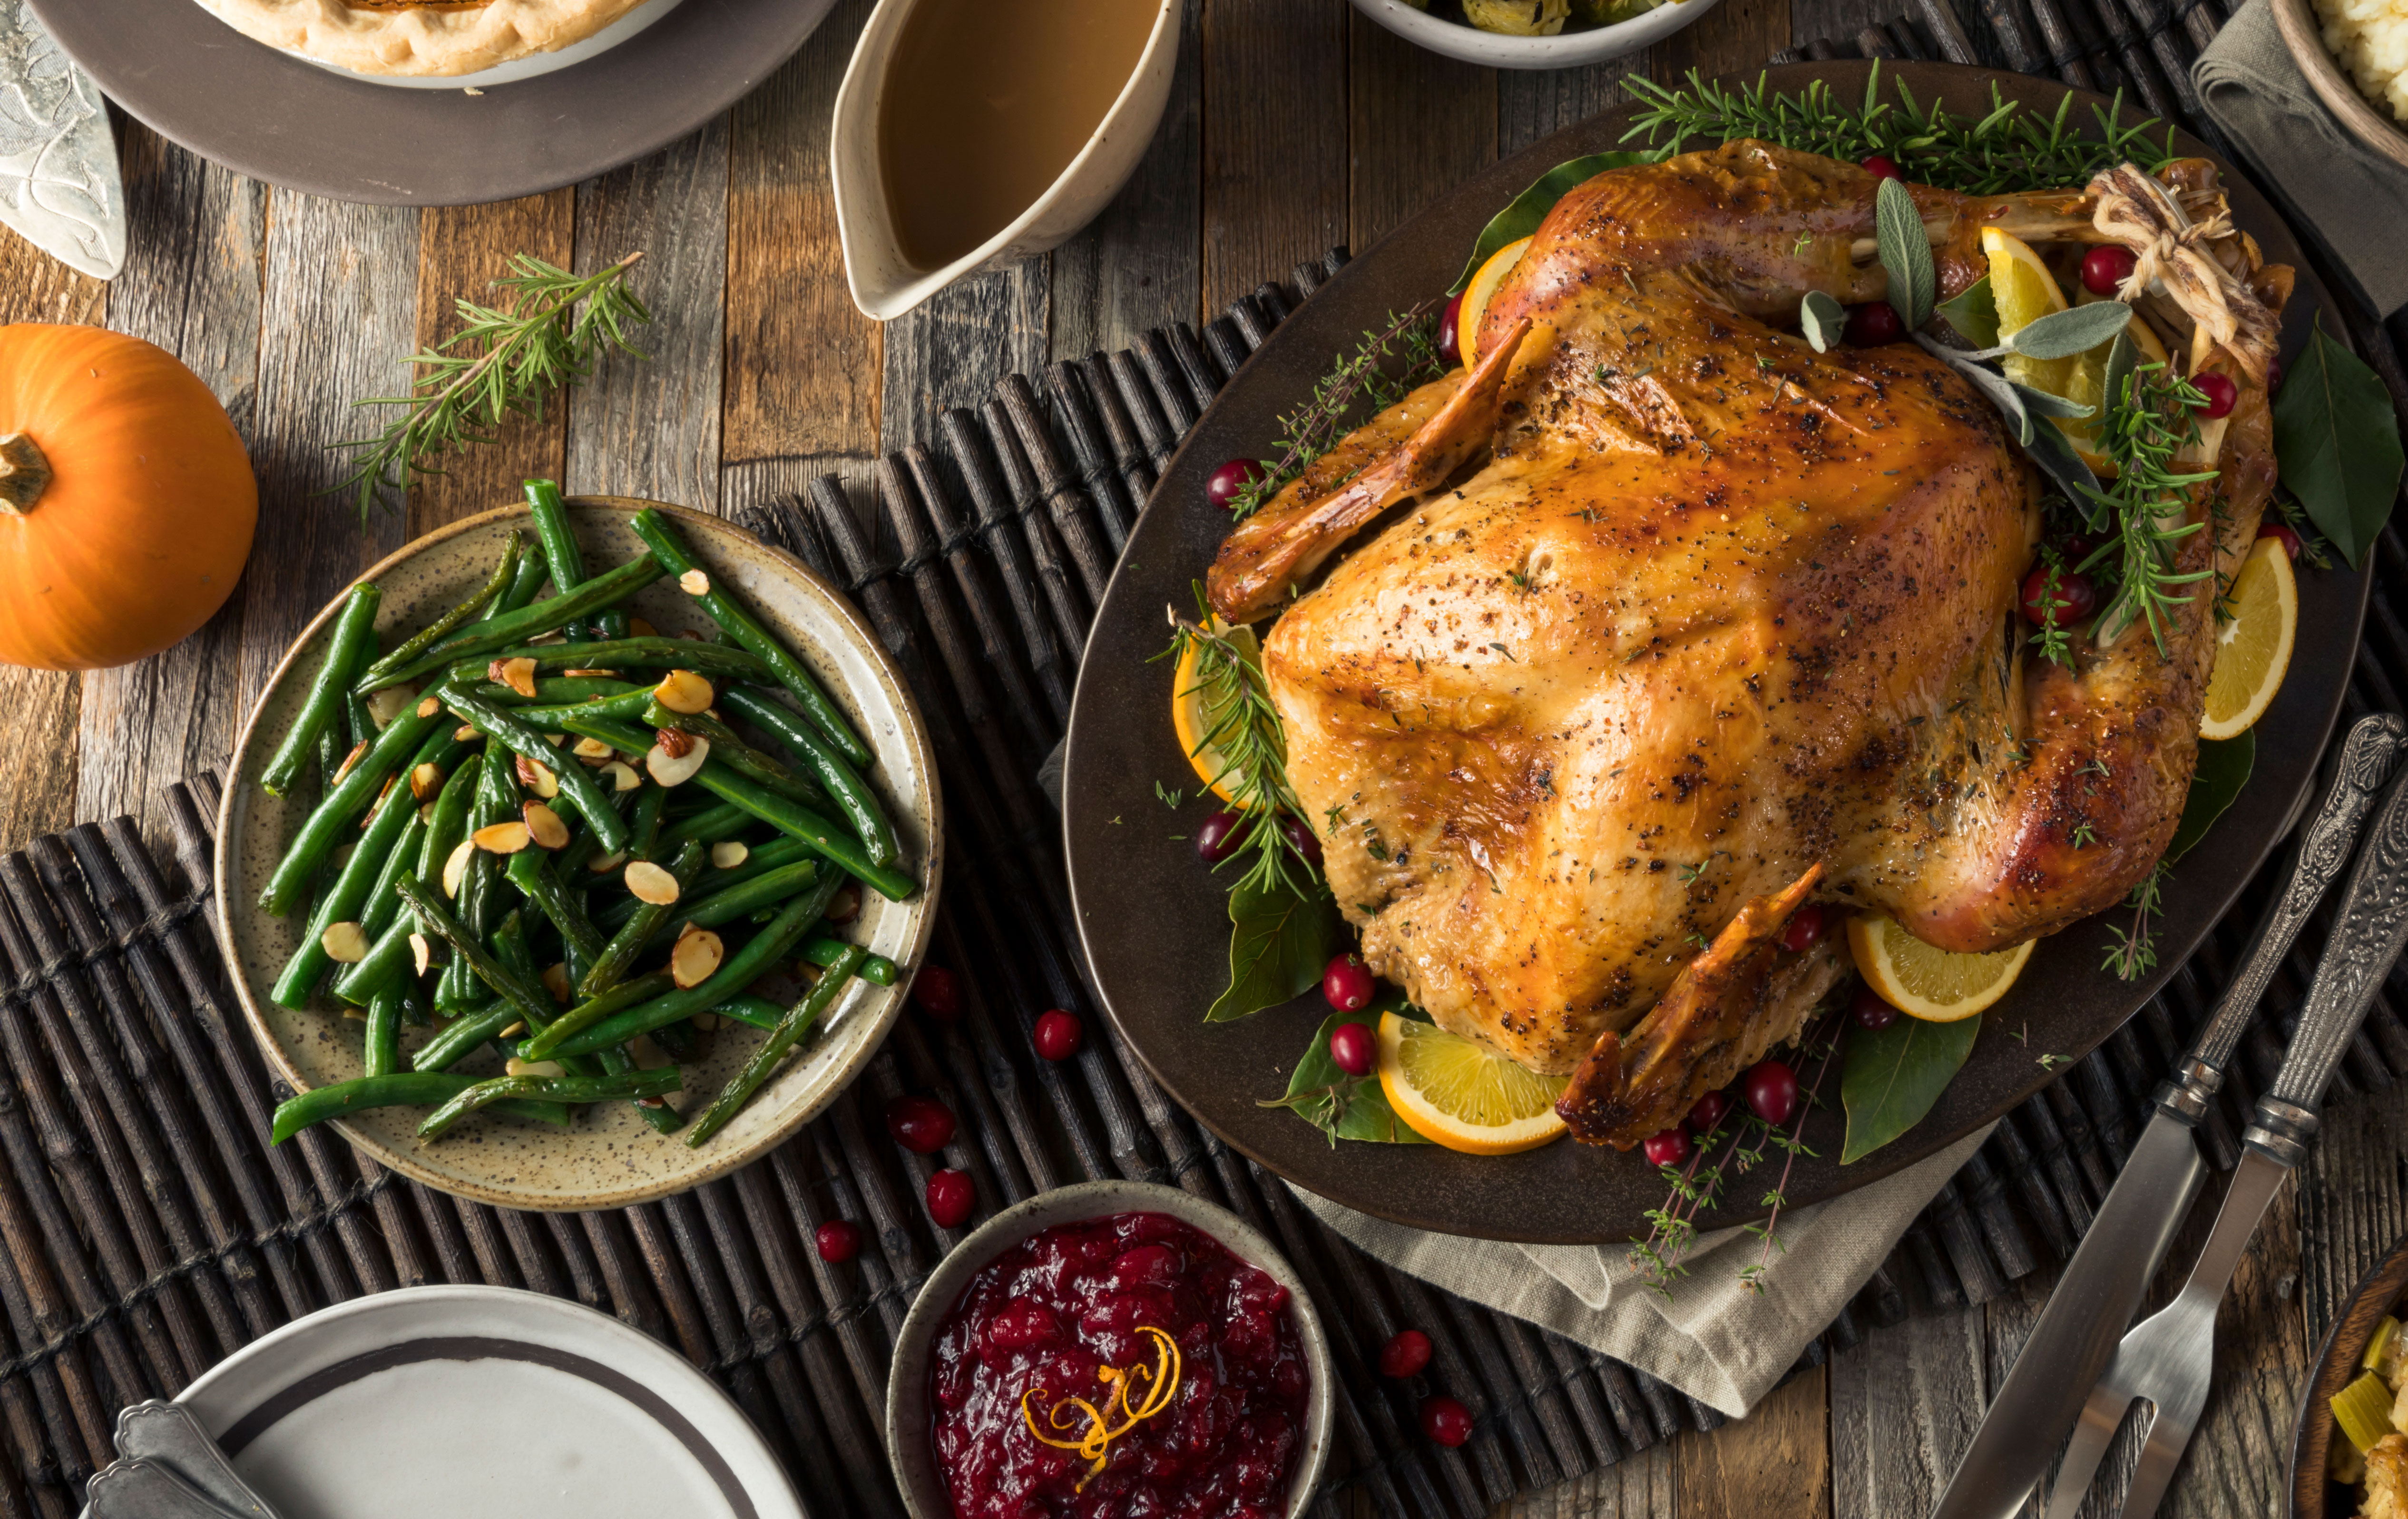 does thanksgiving turkey make you sleepy?